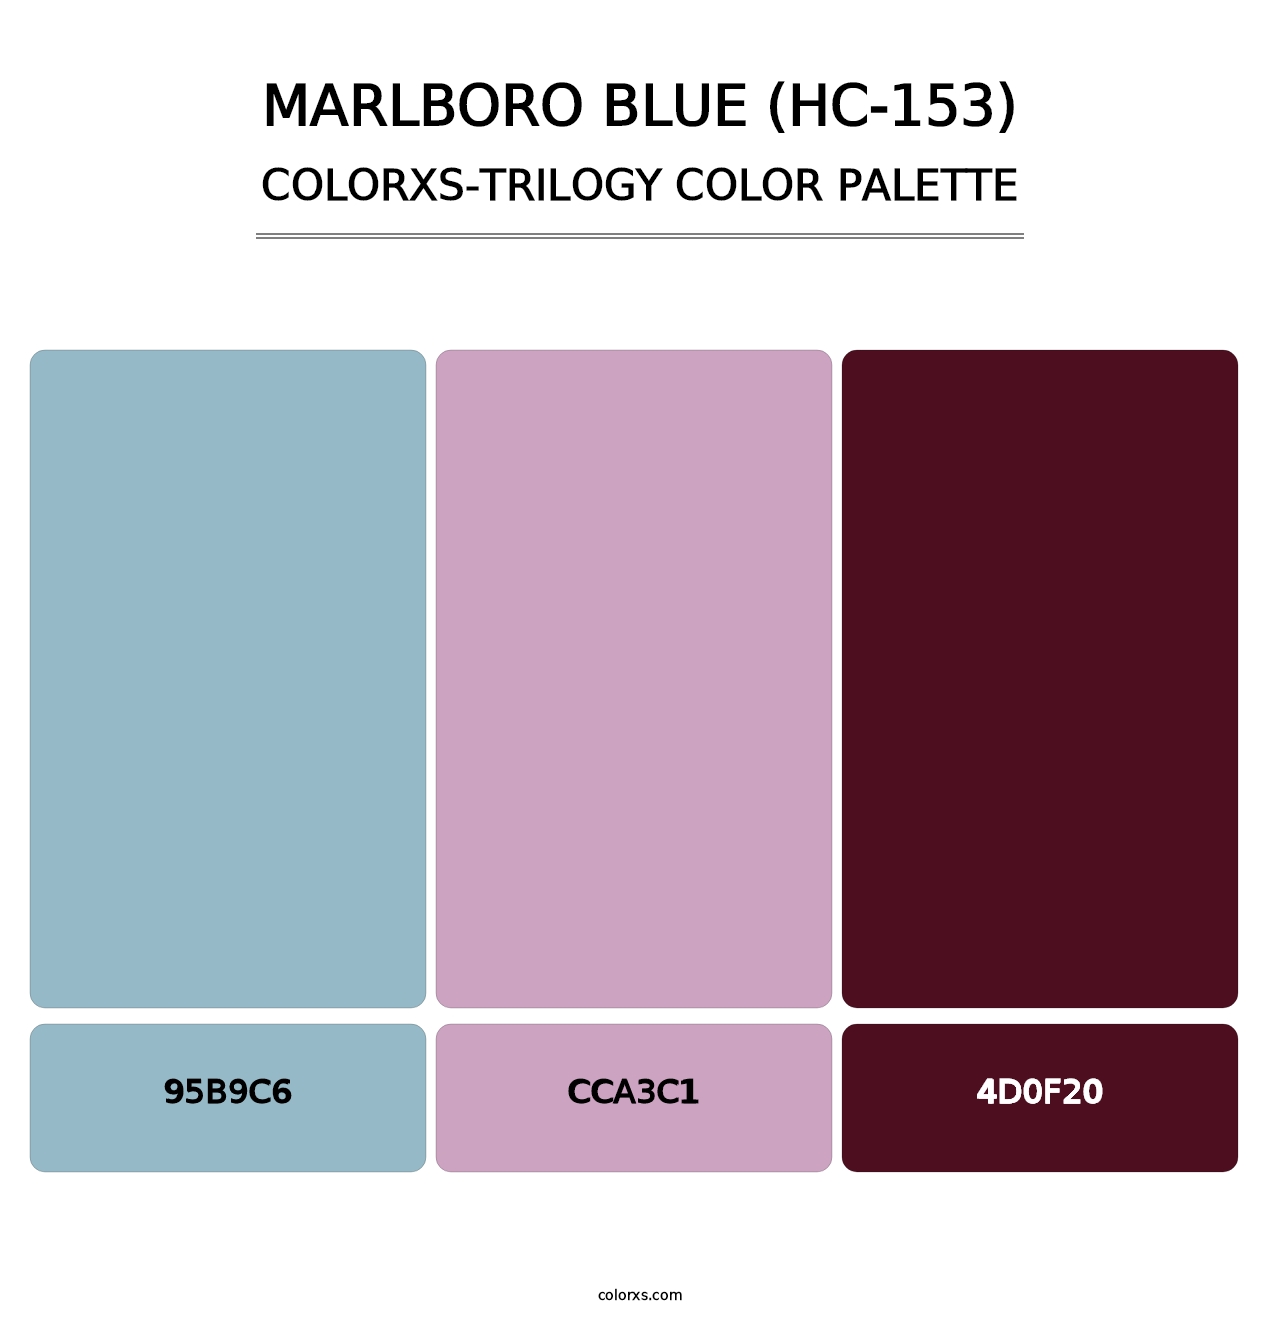 Marlboro Blue (HC-153) - Colorxs Trilogy Palette